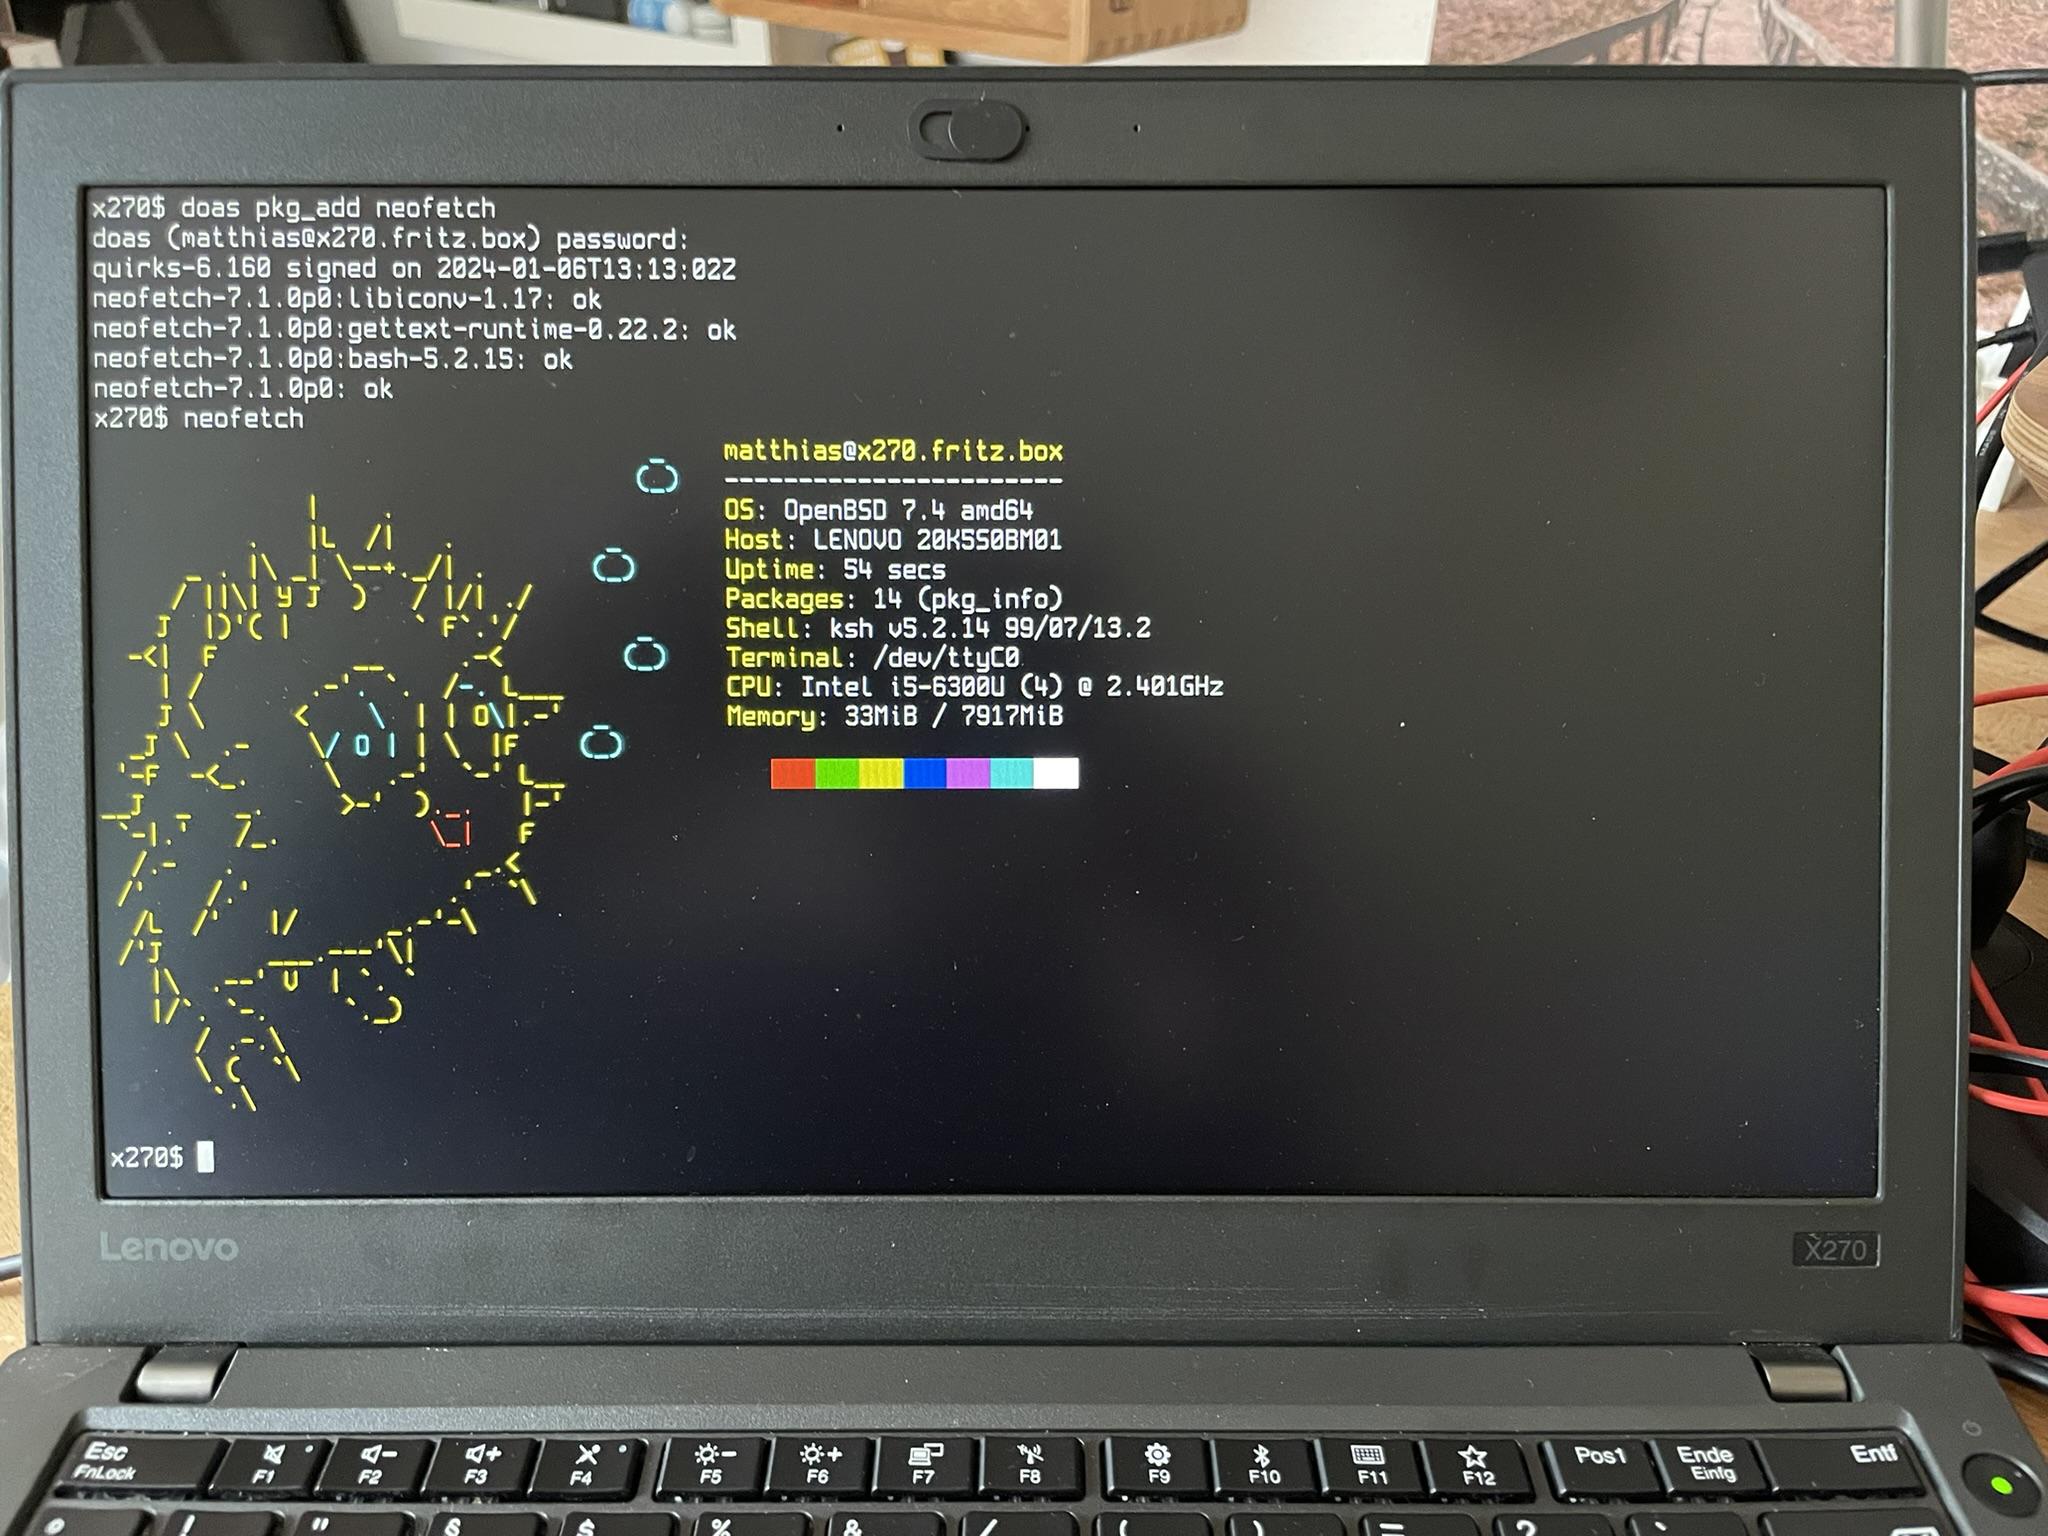 Lenovo ThinkPad X270 w/ neofetch screenshot on OpenBSD 7.4